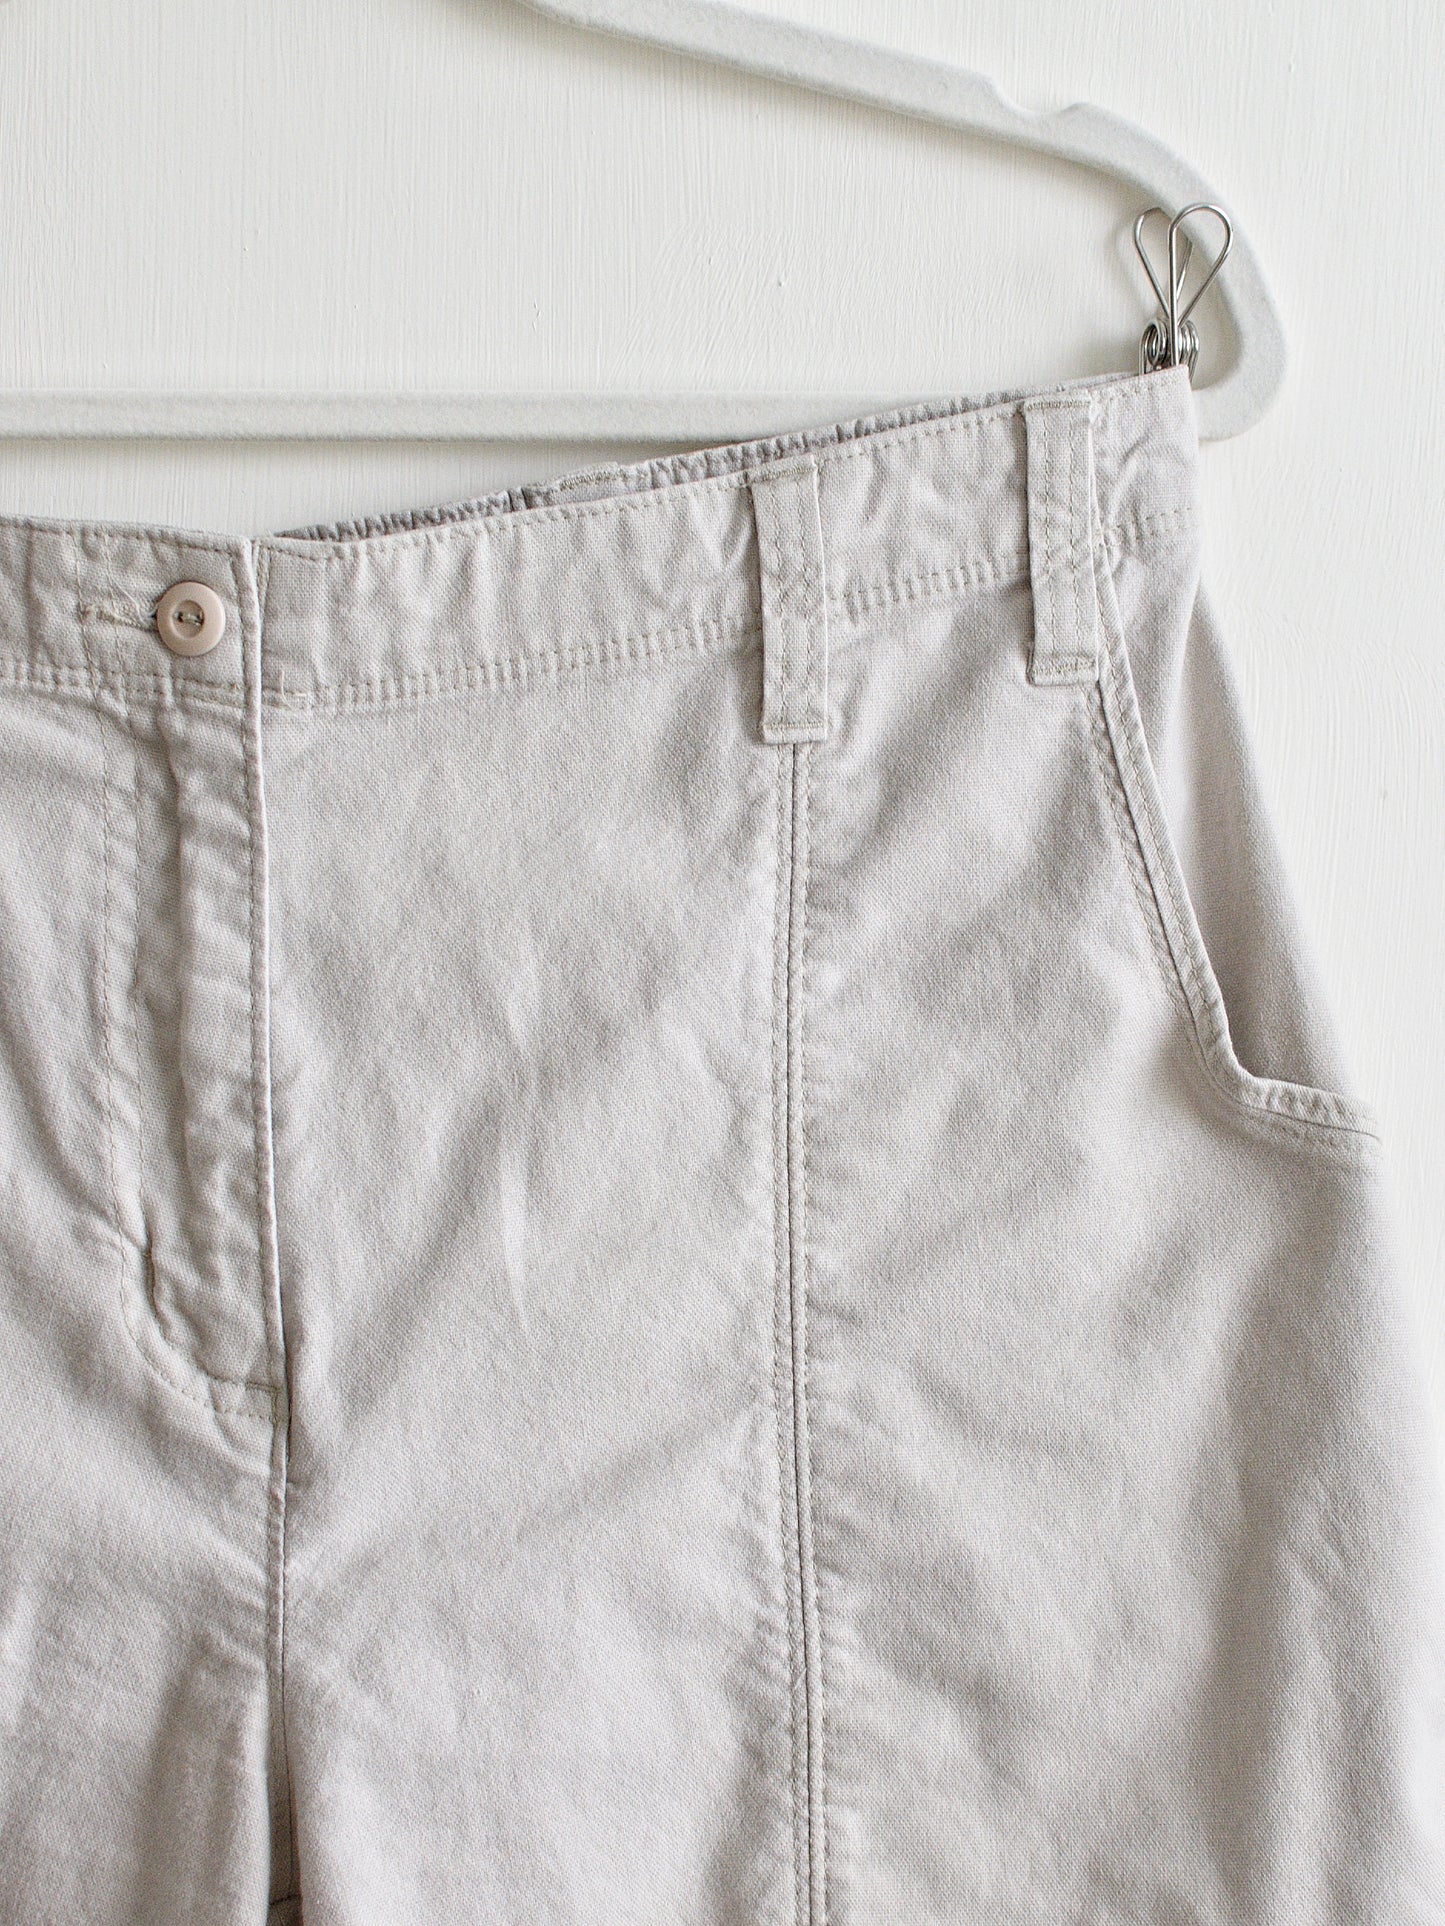 Medium/Large Woolrich Shorts